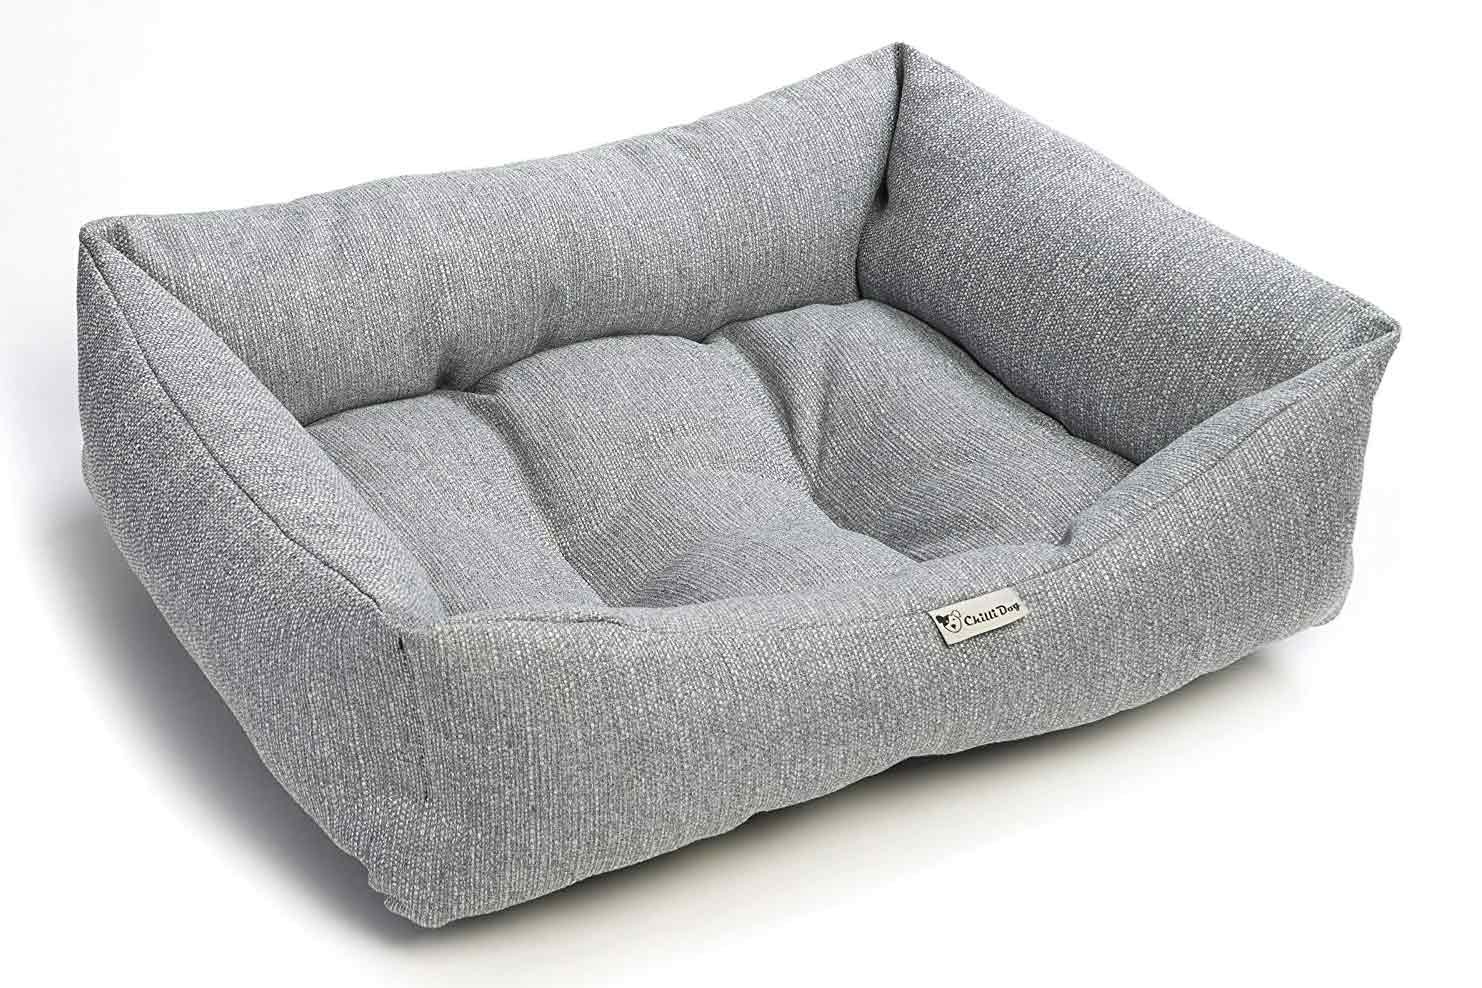 British Made Chilli Dog Stone Linen Look Dog Bed Dog Beds UK